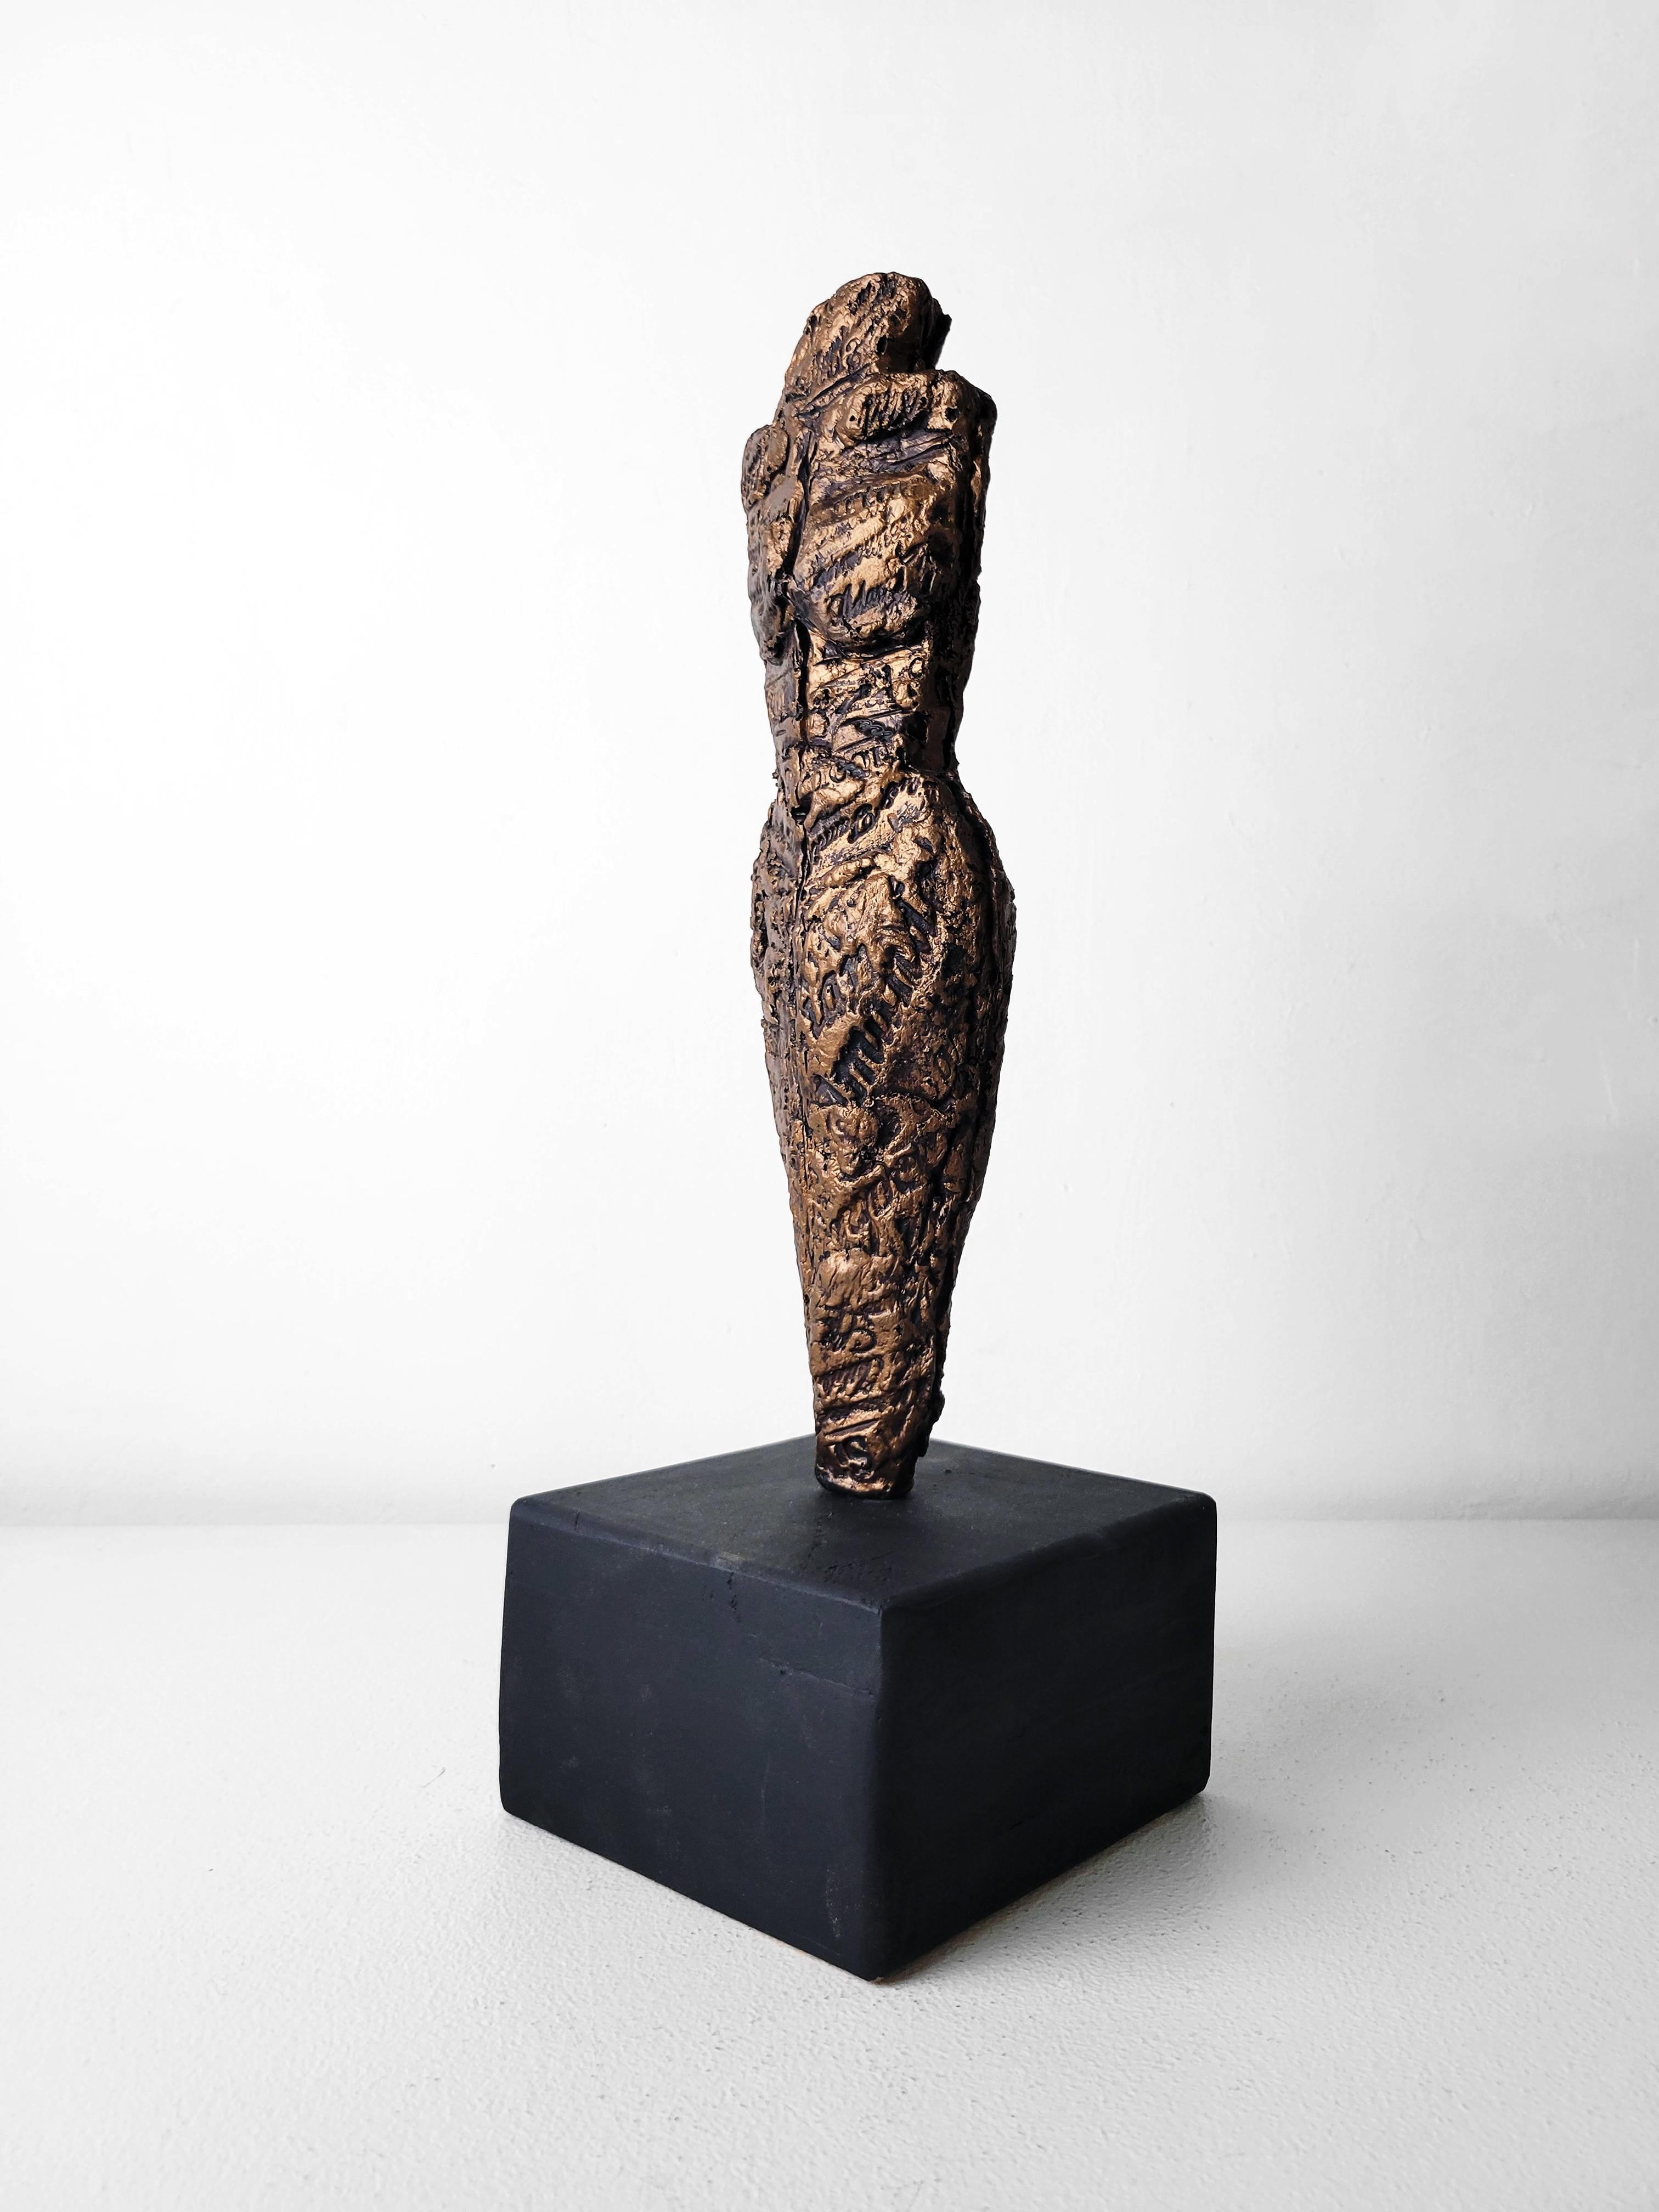 Linda Stein, Dark Knight 692 - Contemporary Mixed Media Resin Metallic Sculpture For Sale 3